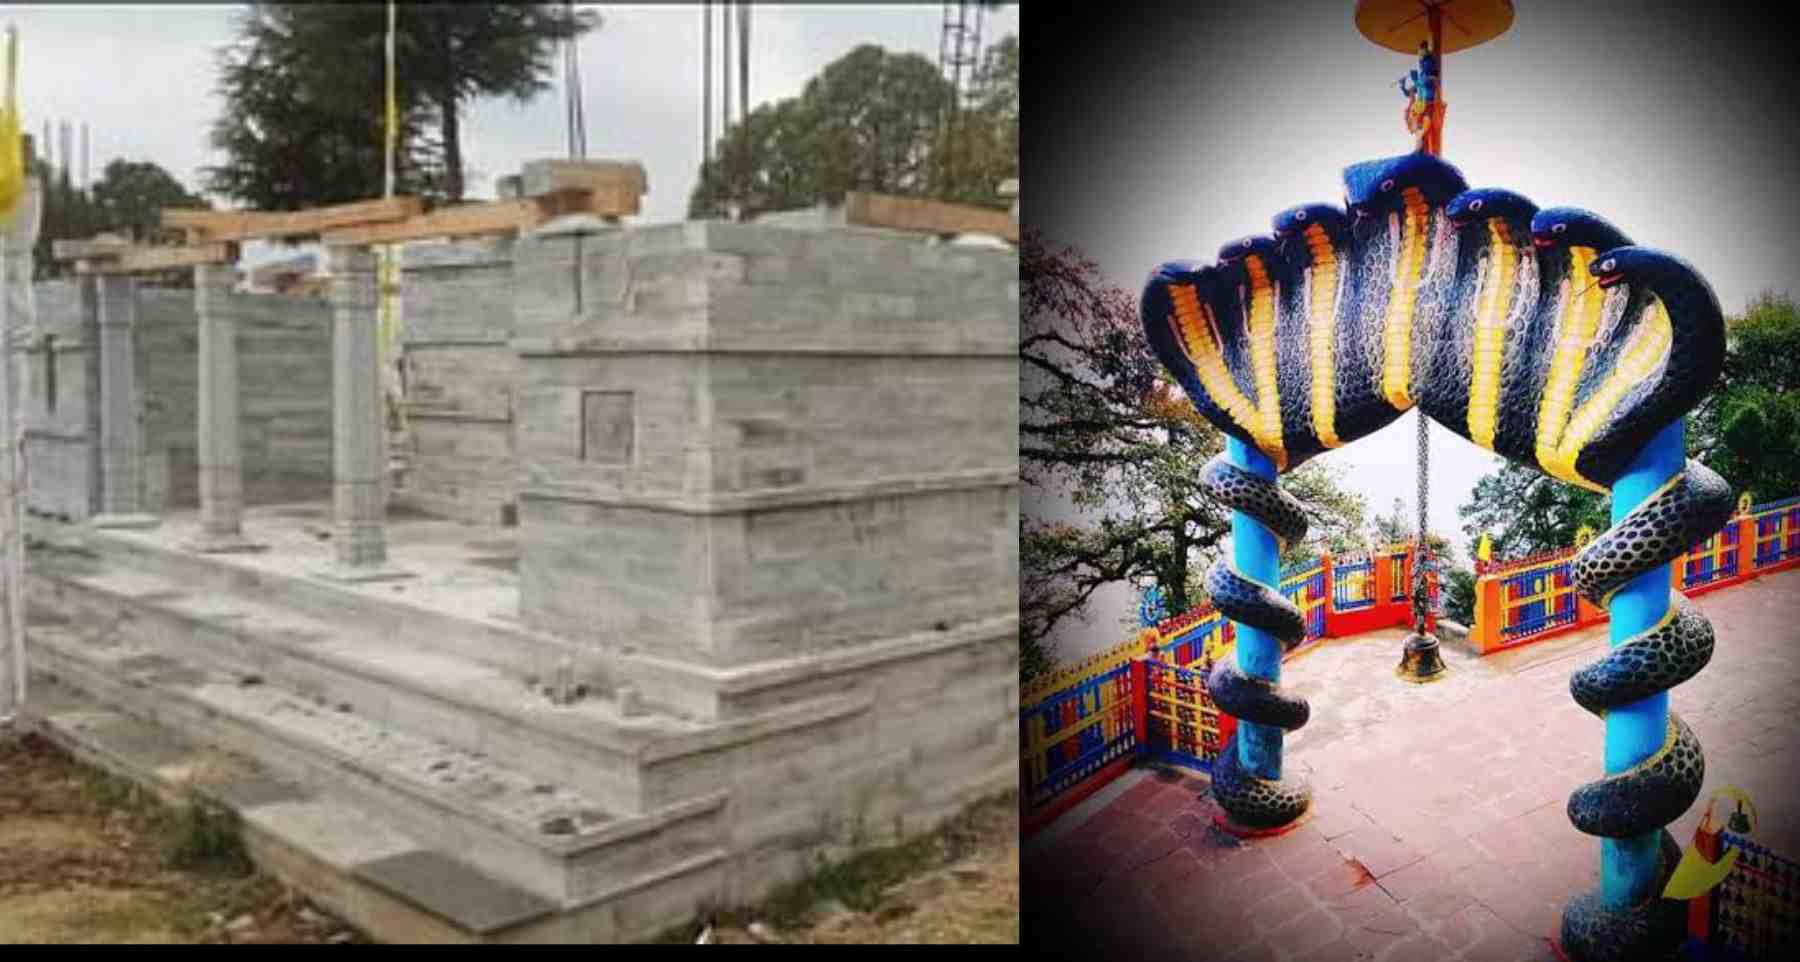 Uttarakhand news: Danda Nagaraja temple uttarakashi made of urad dal instead of cement.